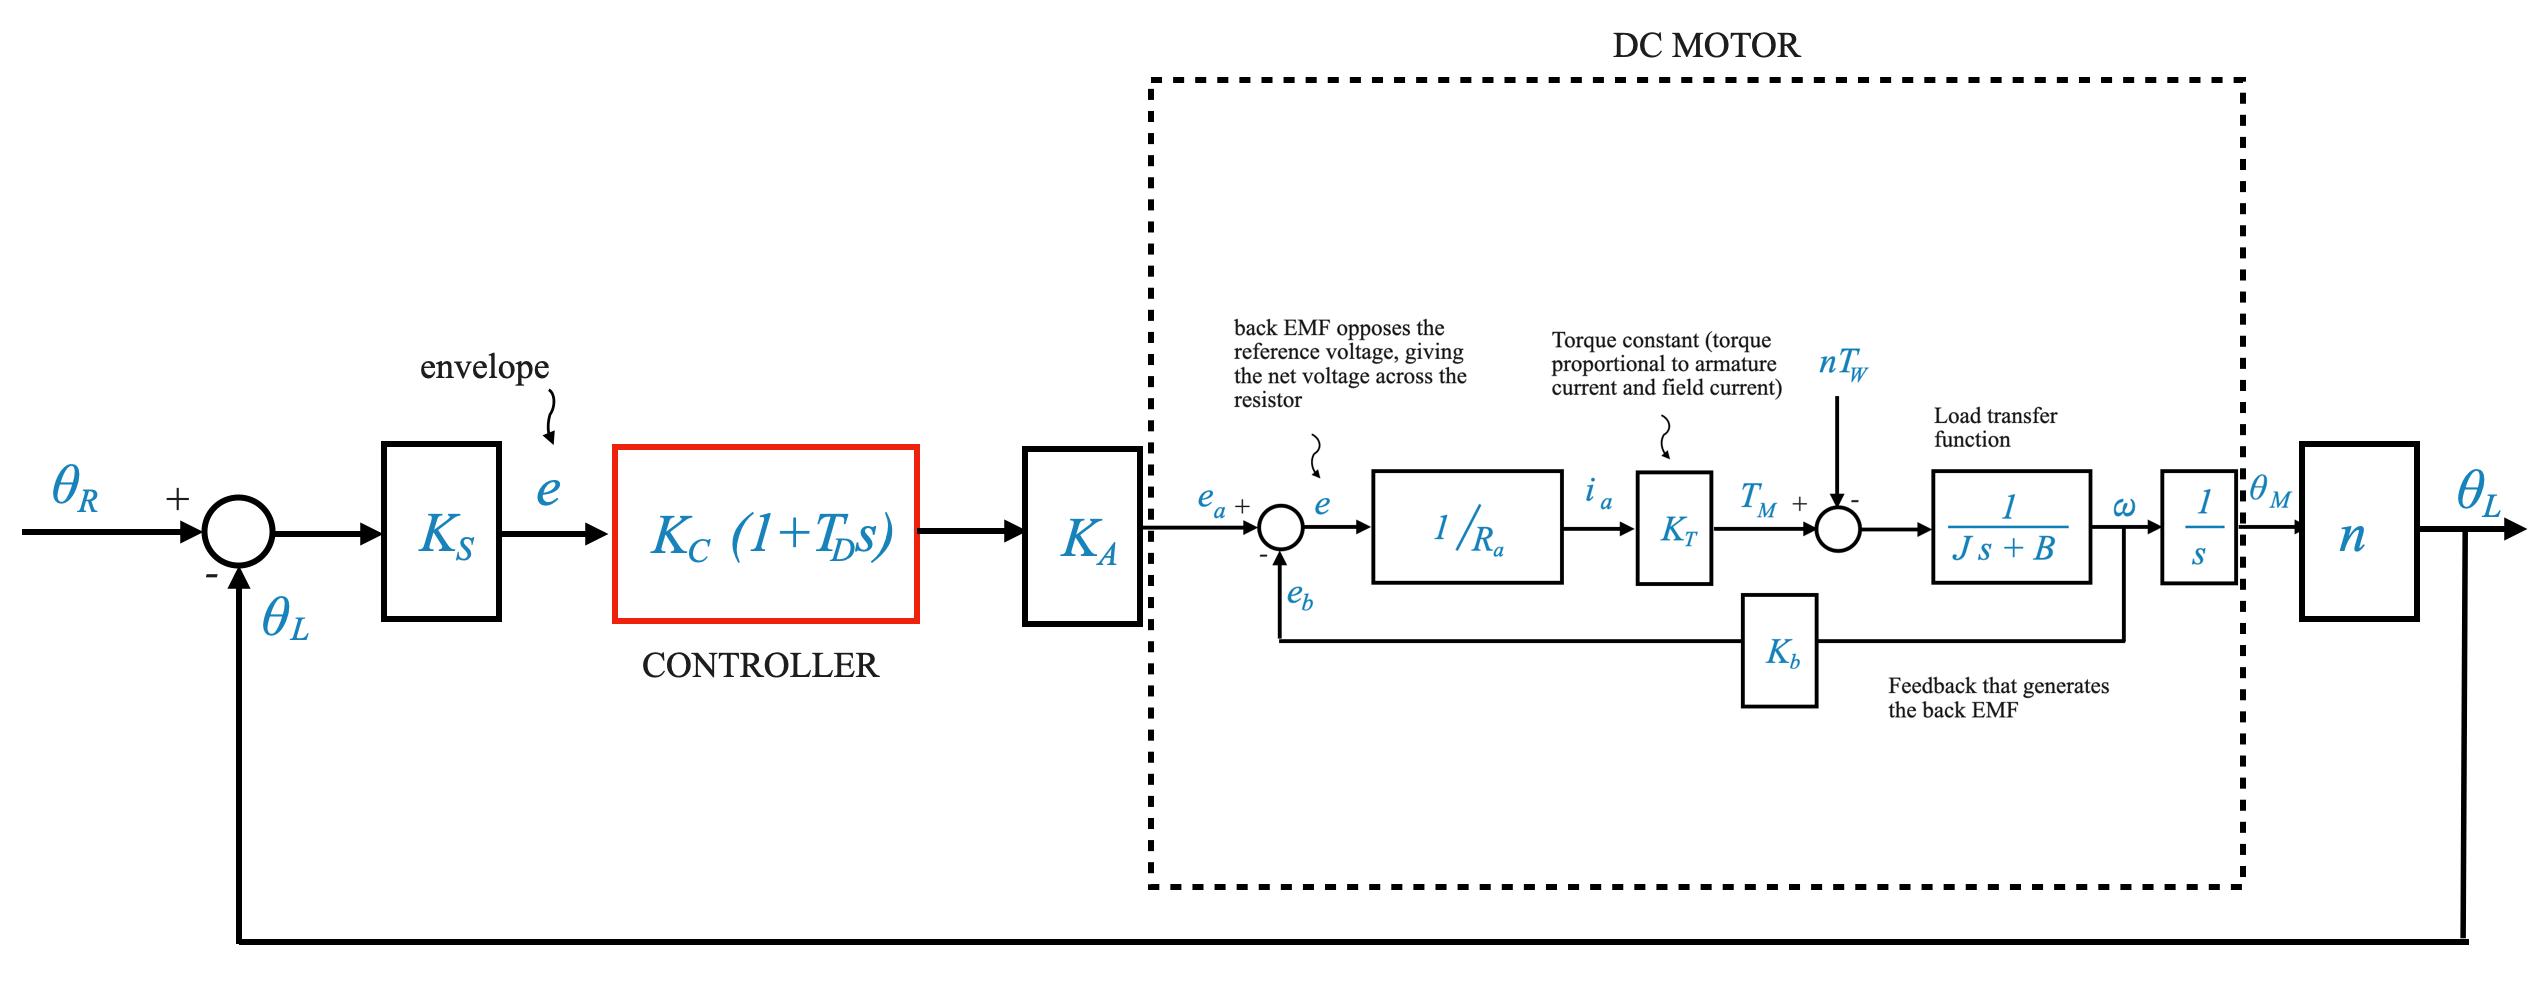 11_AC_hardware_and_case_studies_telephoto_camera_block_diagram_DC_motor_3_1
